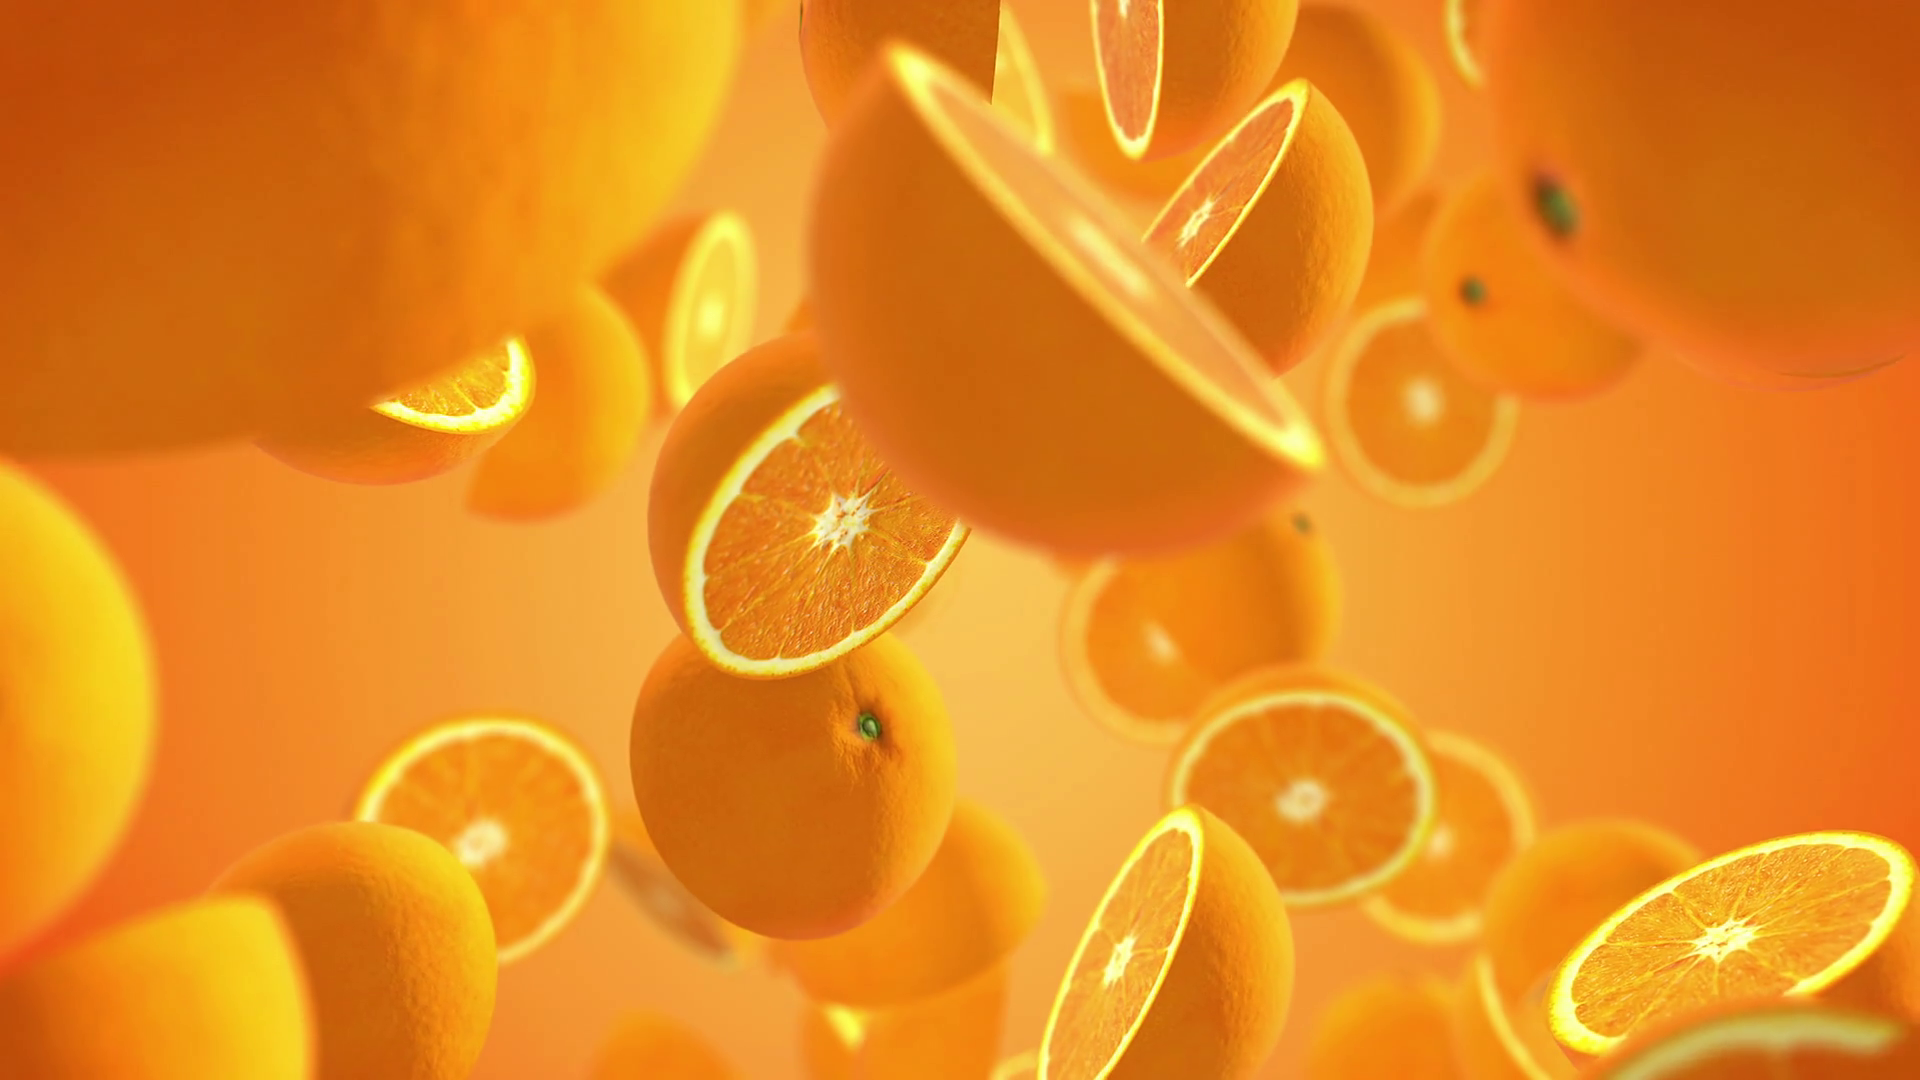 CGI 3D animation of cut juicy oranges floating against orange ...